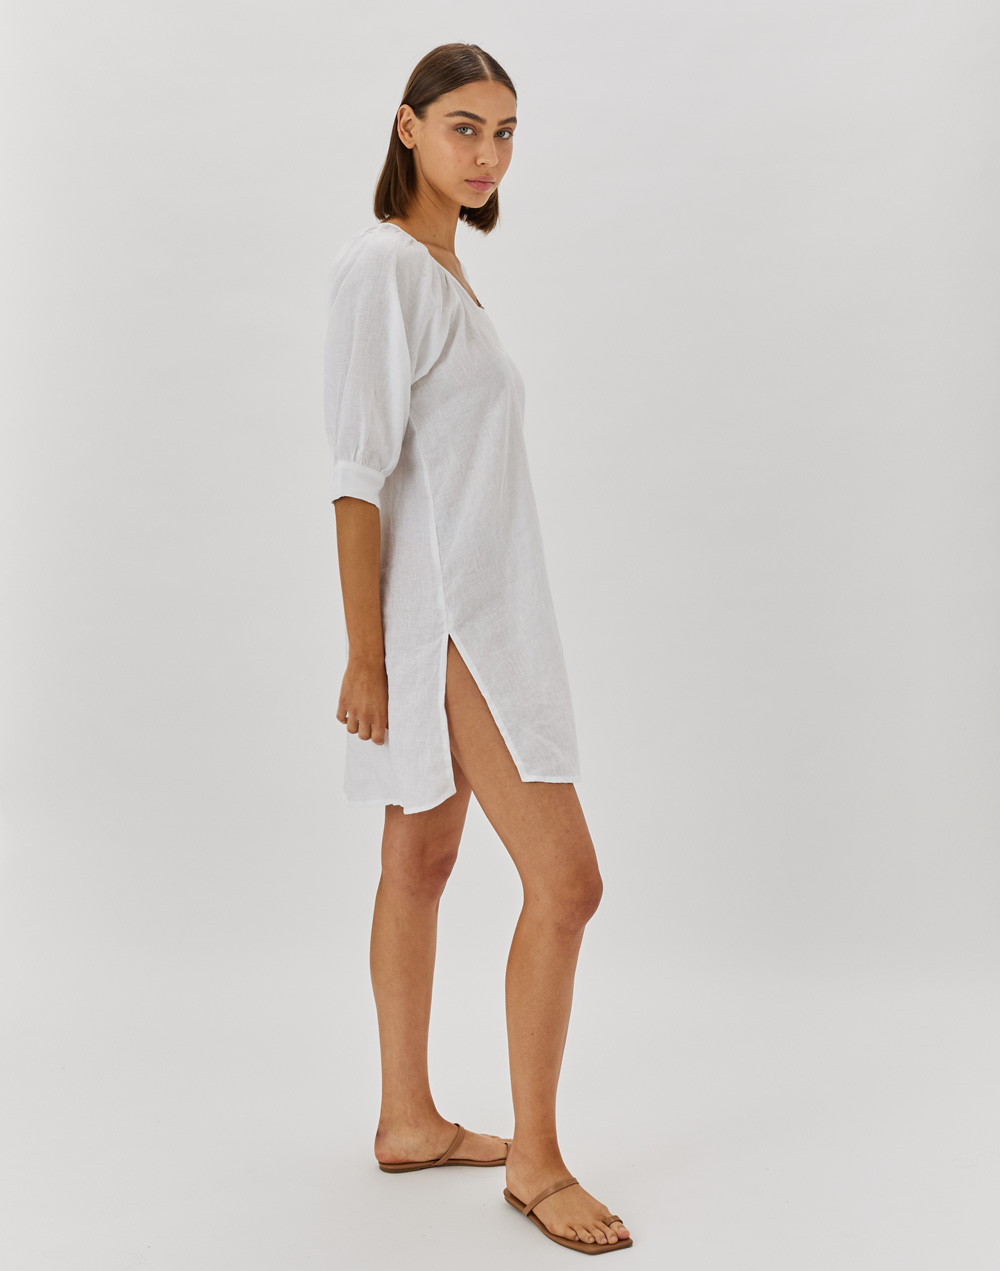 MADEIRA DRESS WHITE